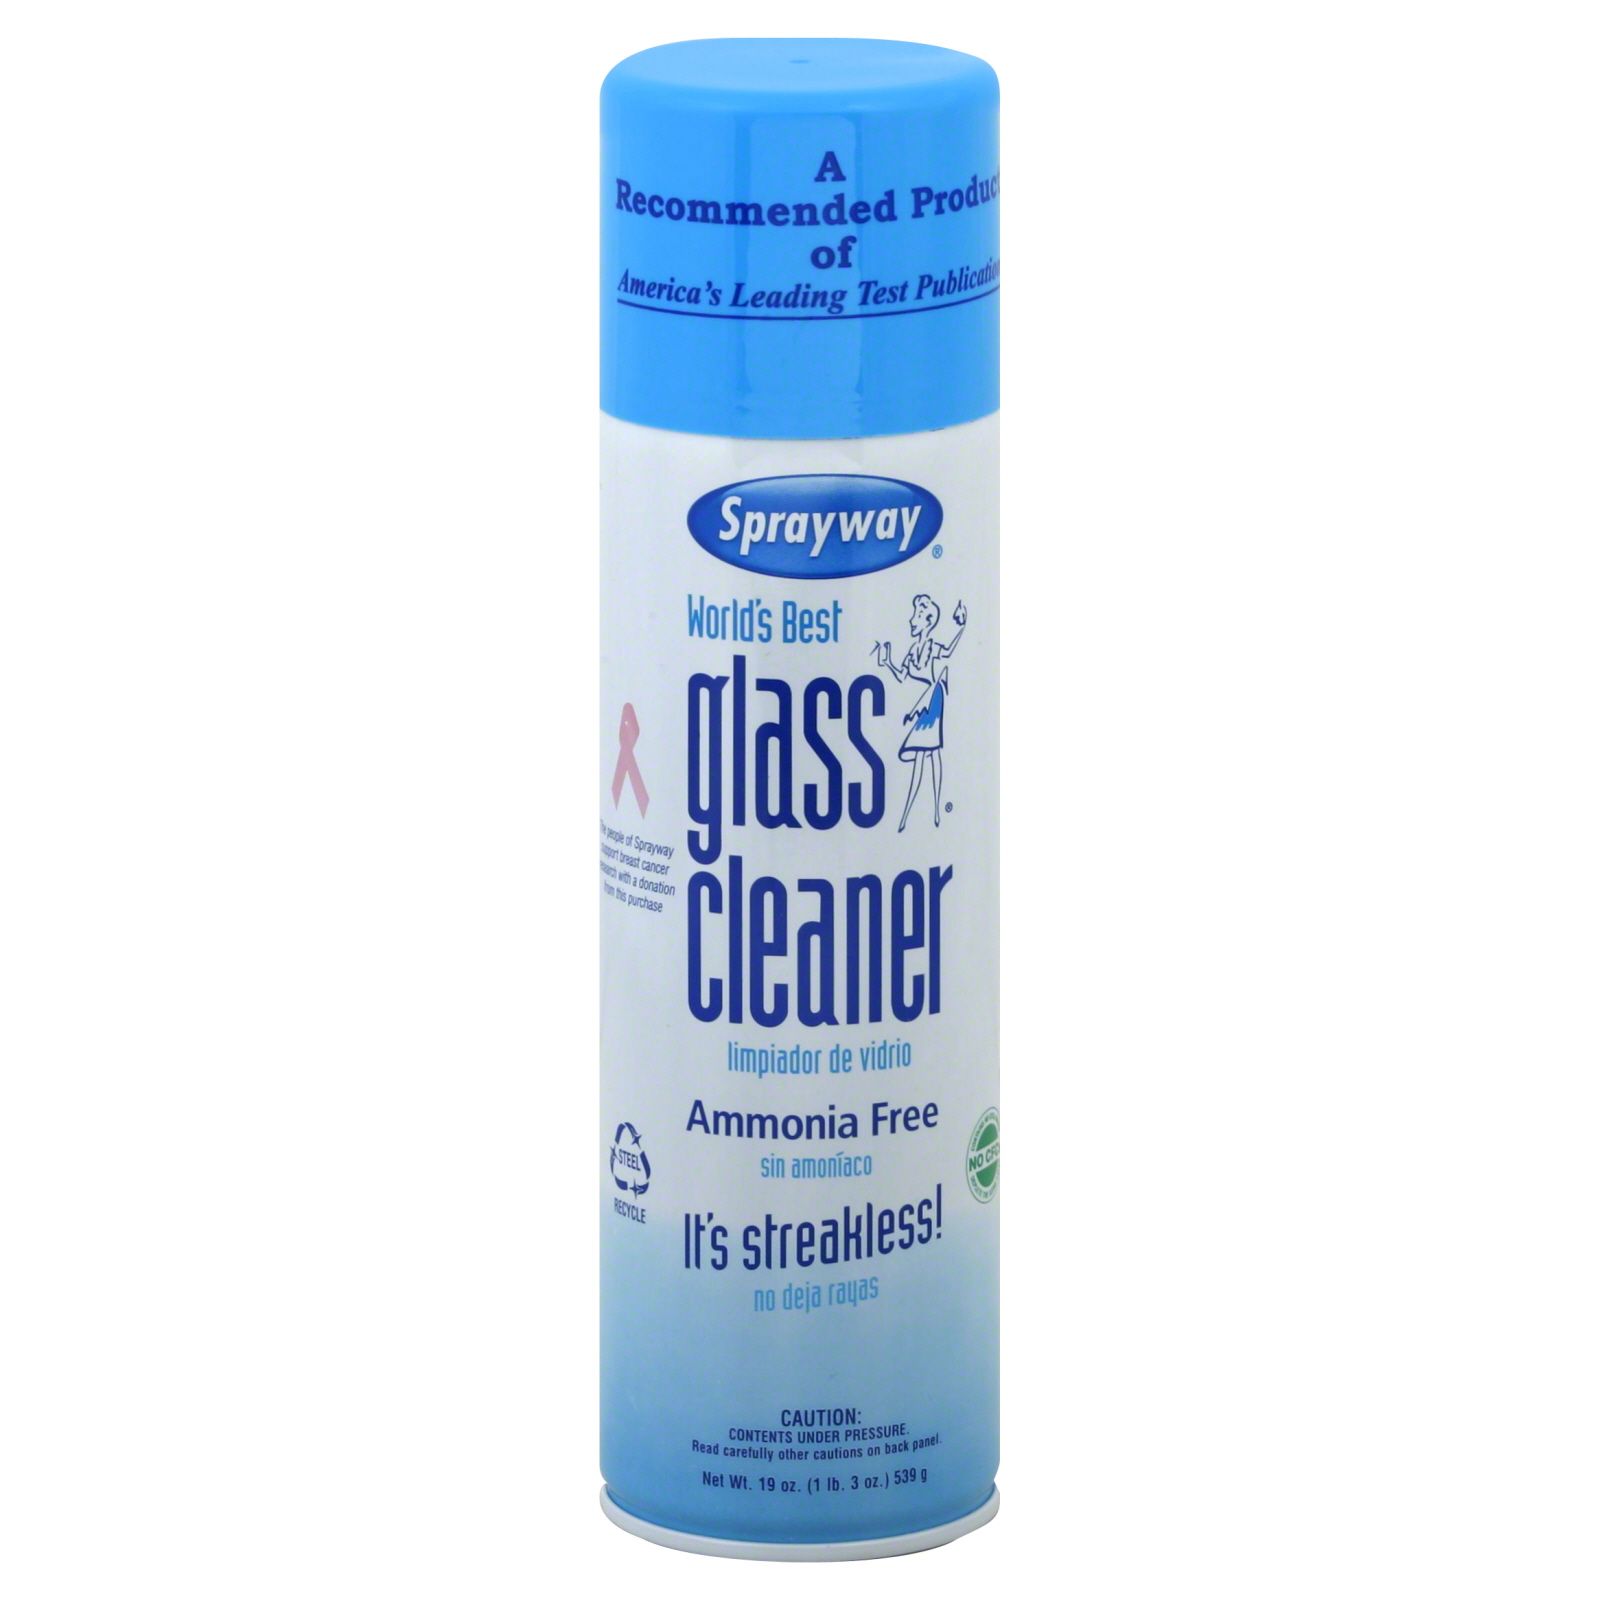 Sprayway Glass Cleaner, 19 oz (1 lb 3 oz) 539 g